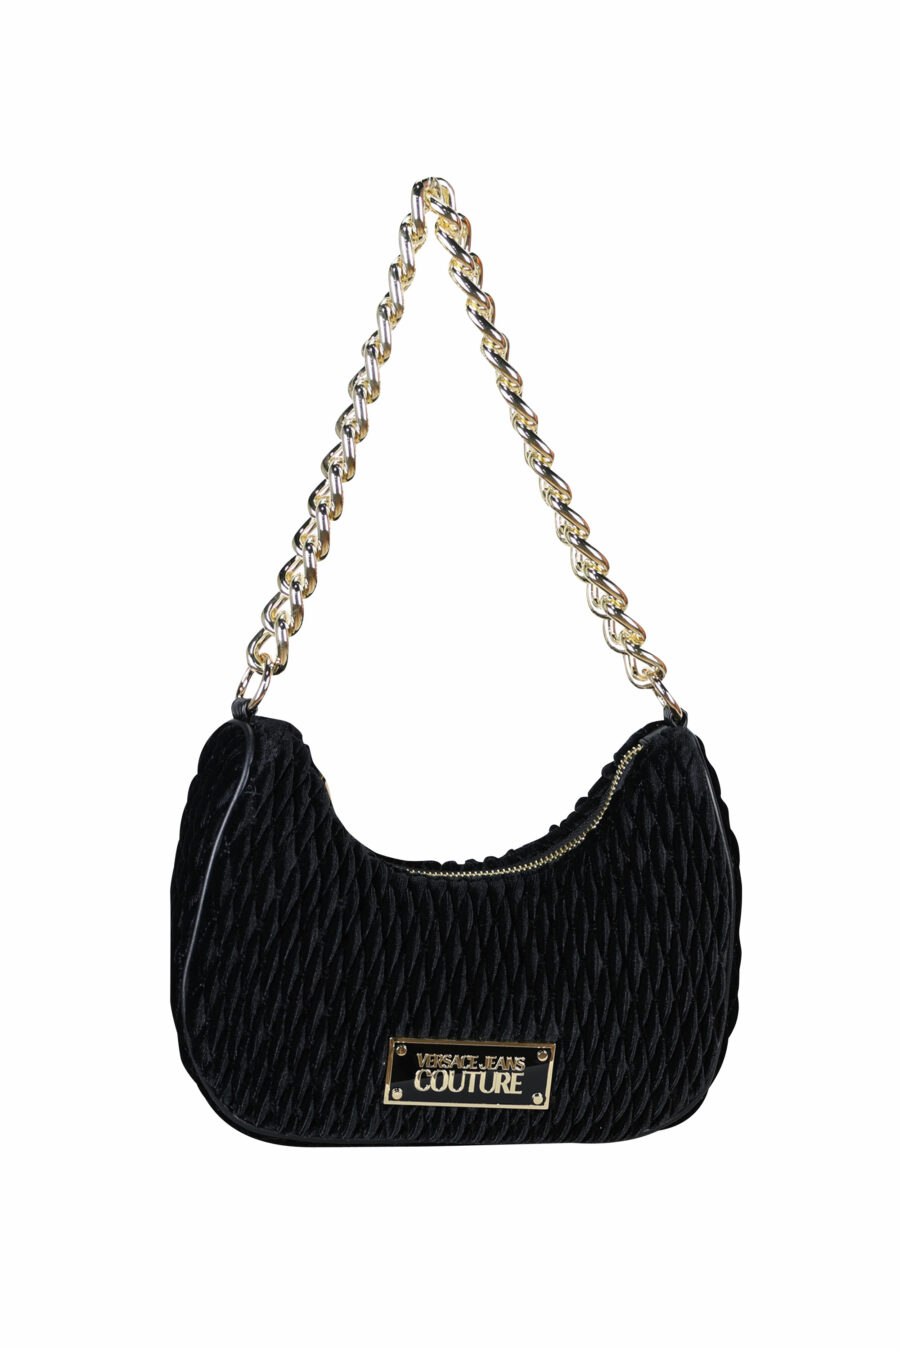 Black velvet hobo style shoulder bag with chain and logo plaque - 8052019408690